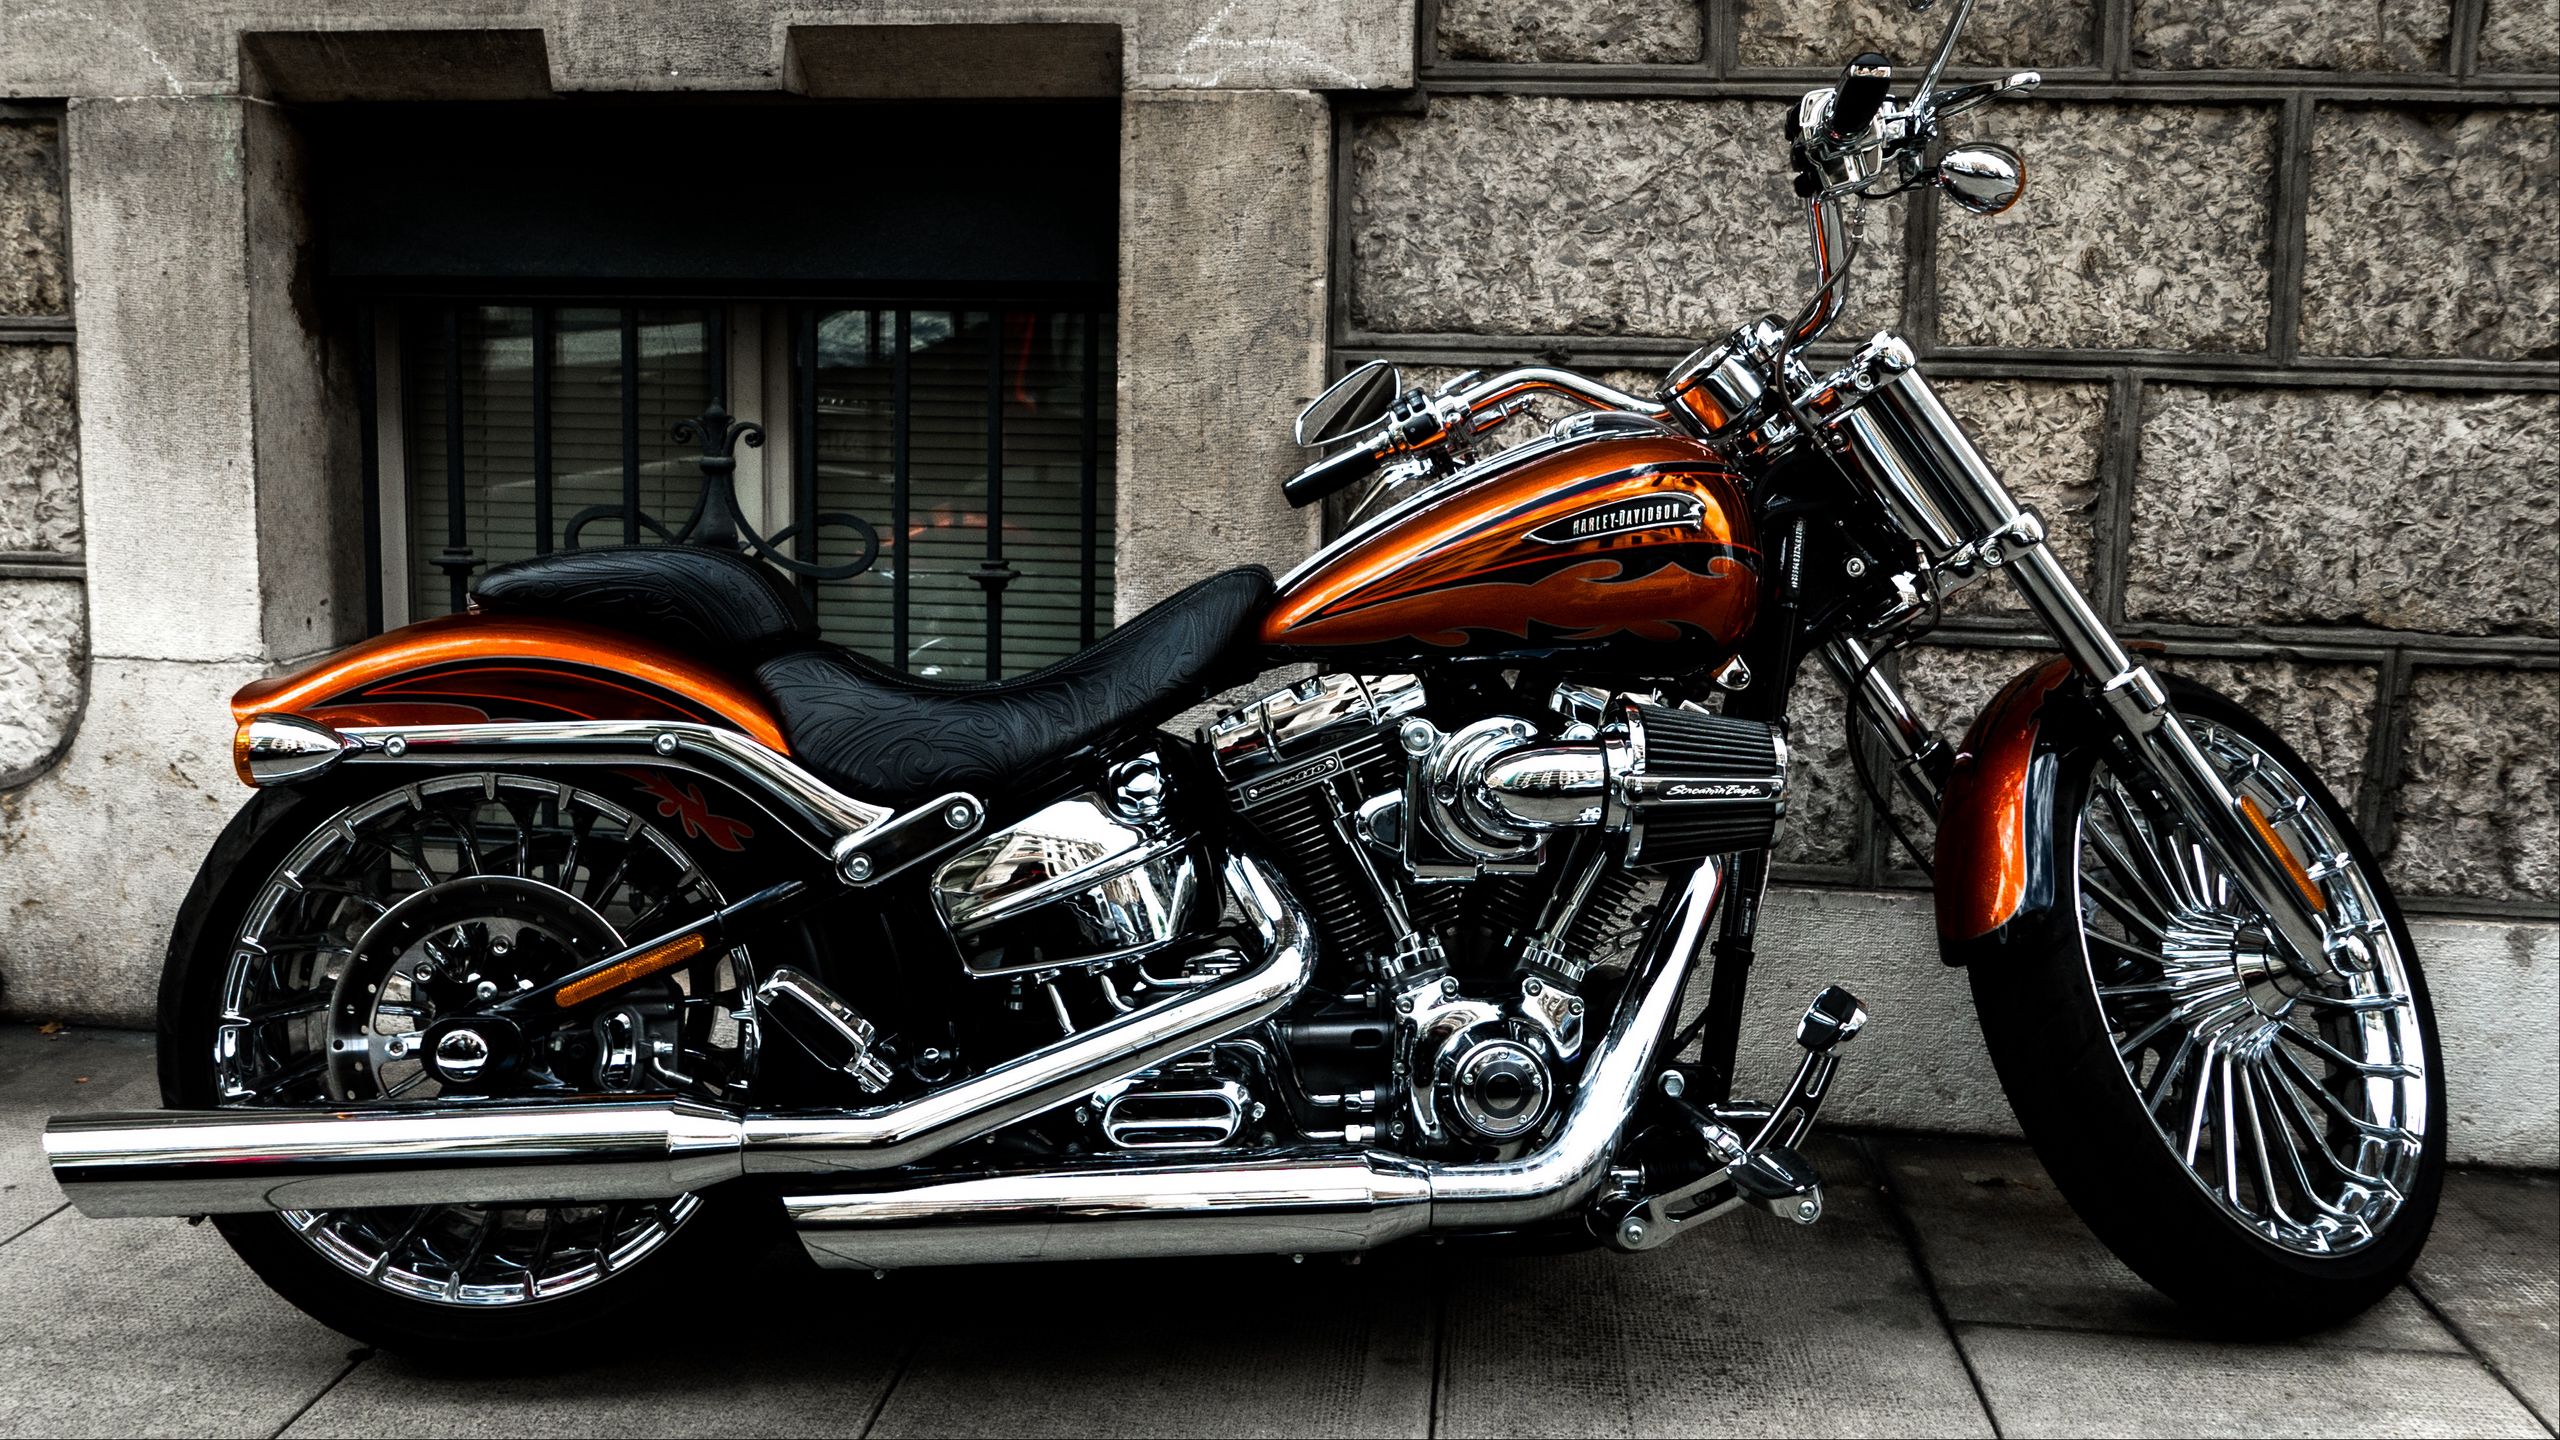 2560x1440 Wallpaper motorcycle, bike, side view, wheel